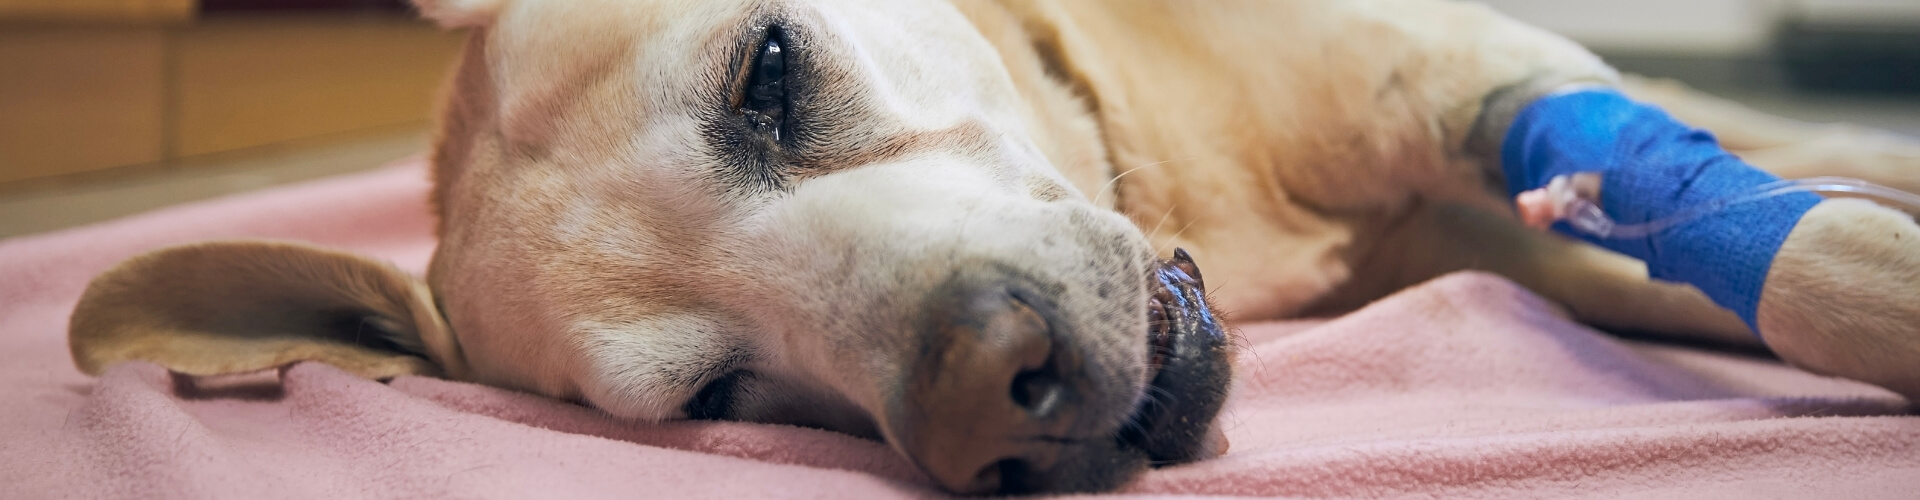 PETPROTECT Magazin: Das Cushing-Syndrom bei Hunden - Symptome, Diagnostik und Behandlung